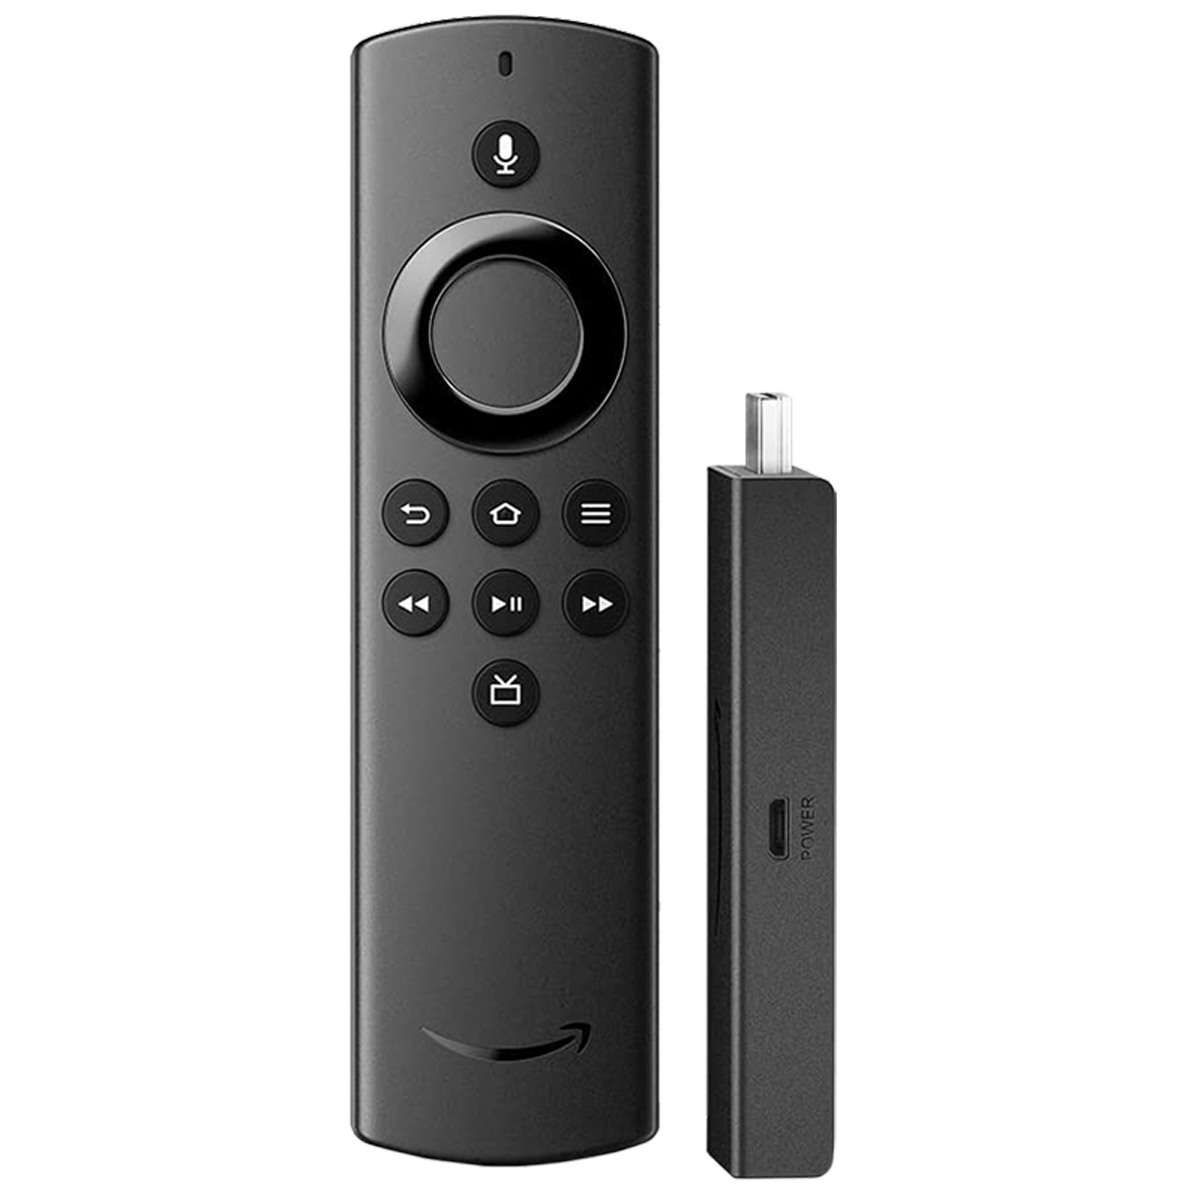 Amazon FireTV Stick Lite With Alexa Voice Remote Lite (Stream HD Quality Video, B07ZZW86G4, Black)_1